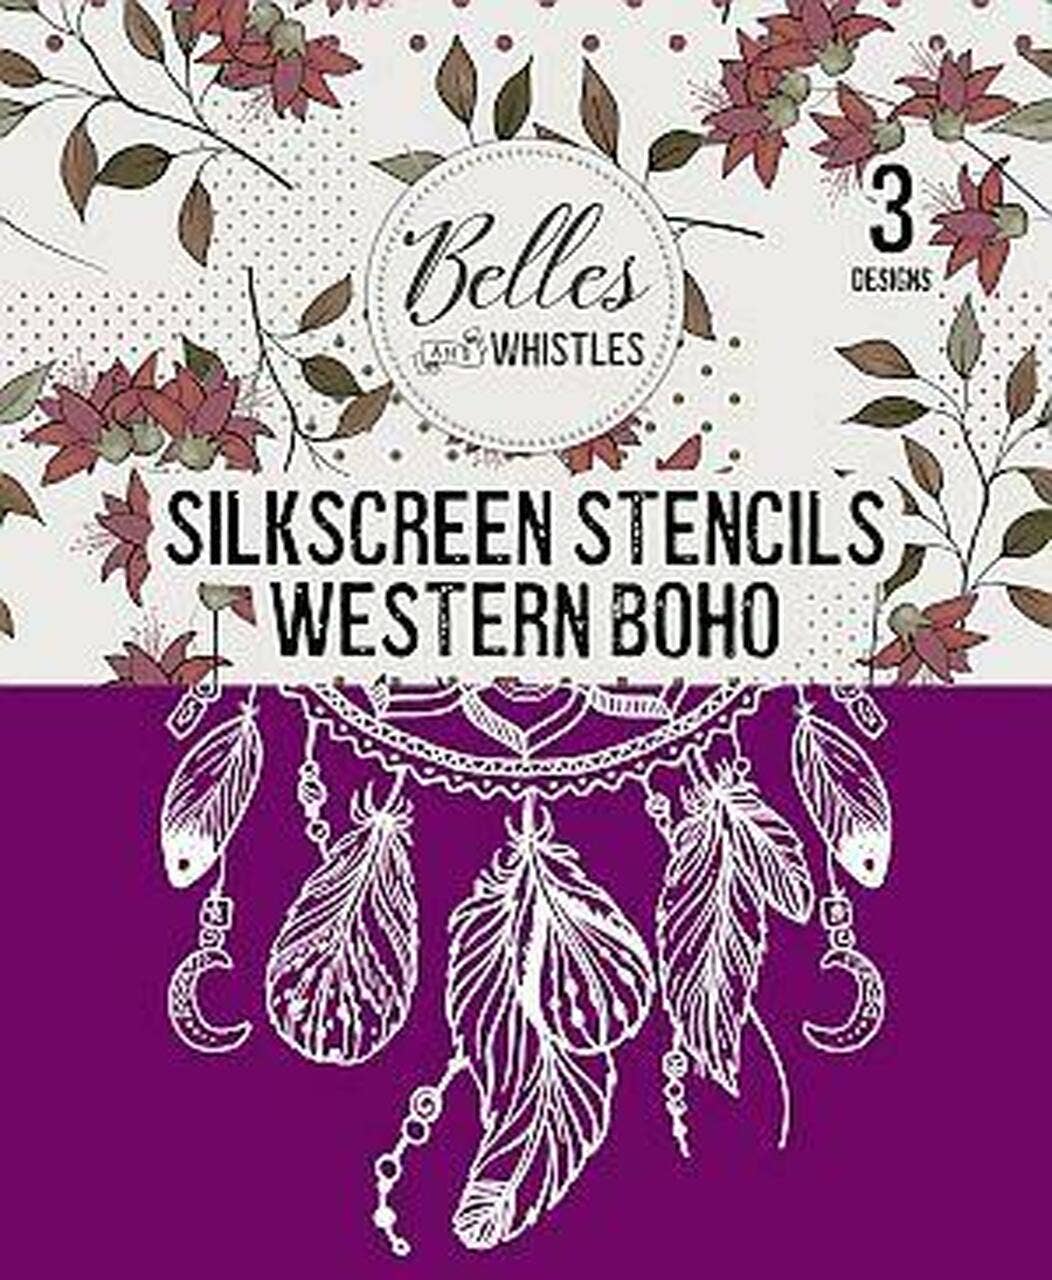 Western Boho - Silkscreen Stencil